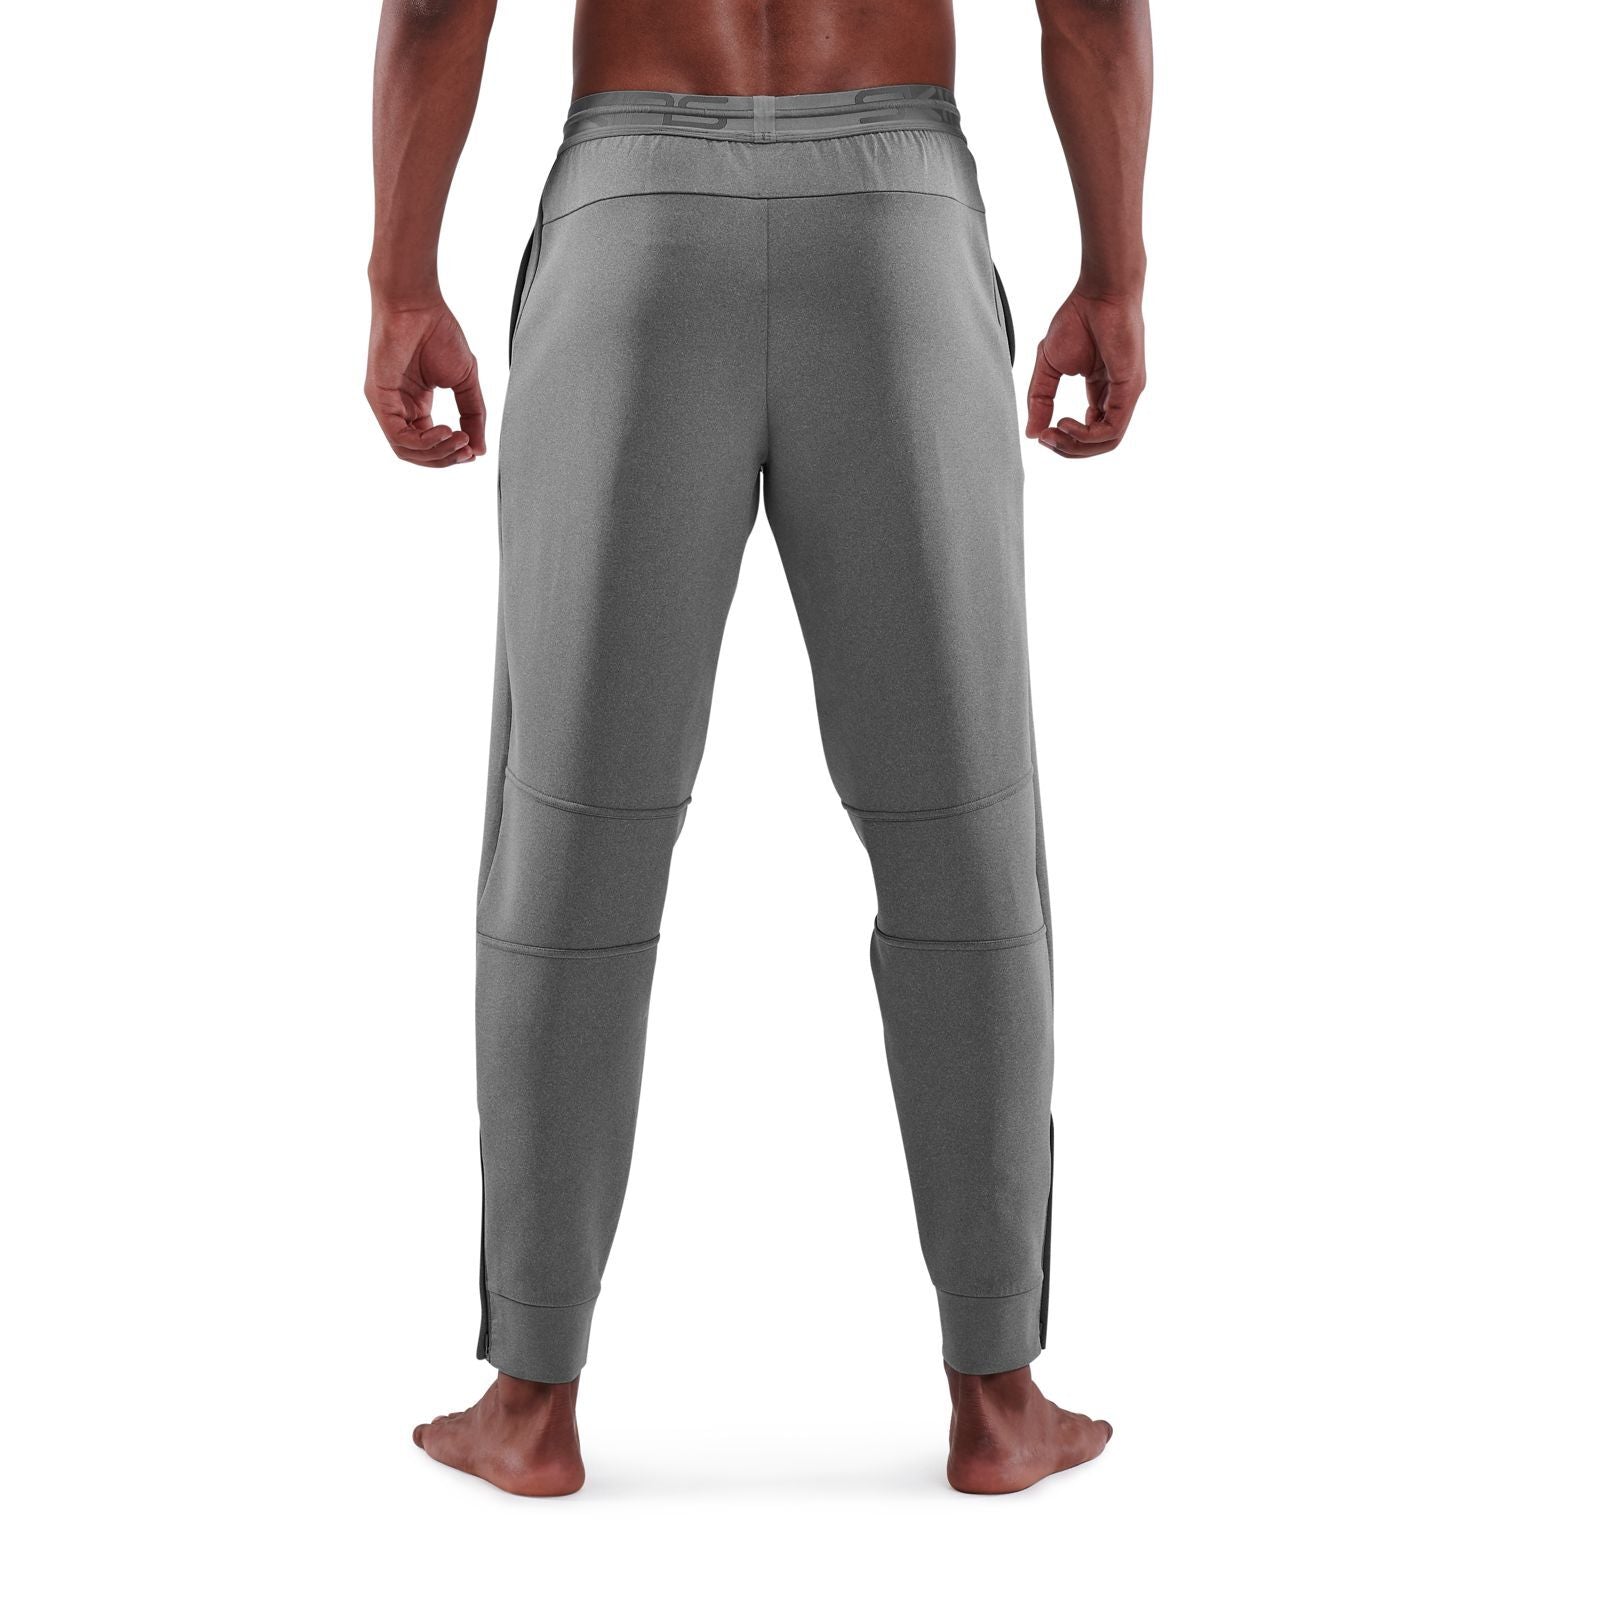 SKINS SERIES-3 Men's Warm Up Pants Charcoal Marl